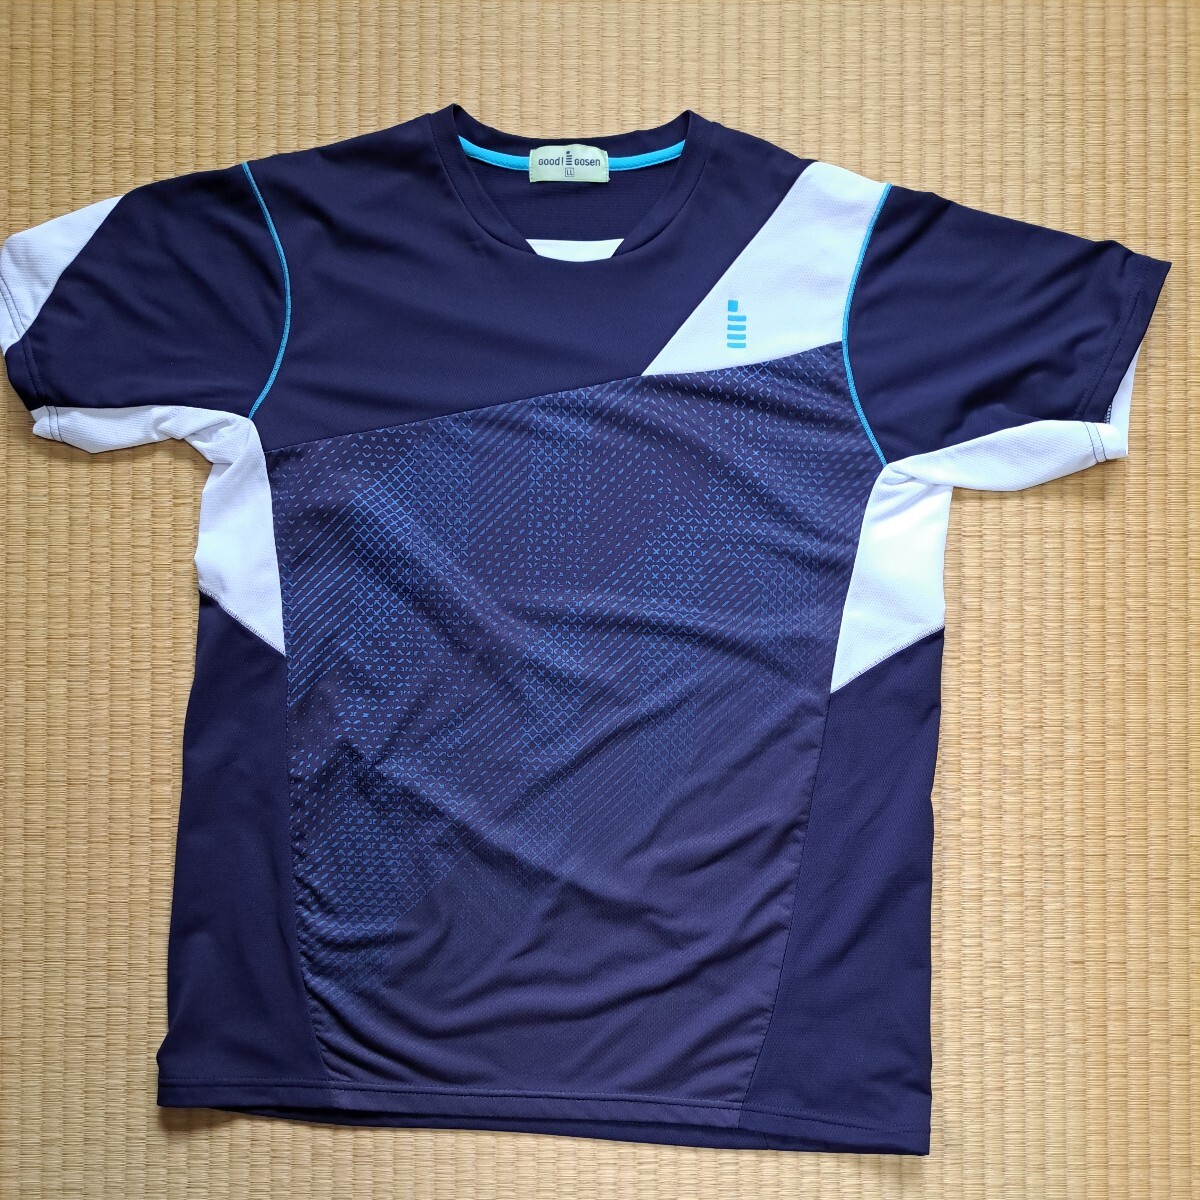  badminton game wear short sleeves T-shirt LL